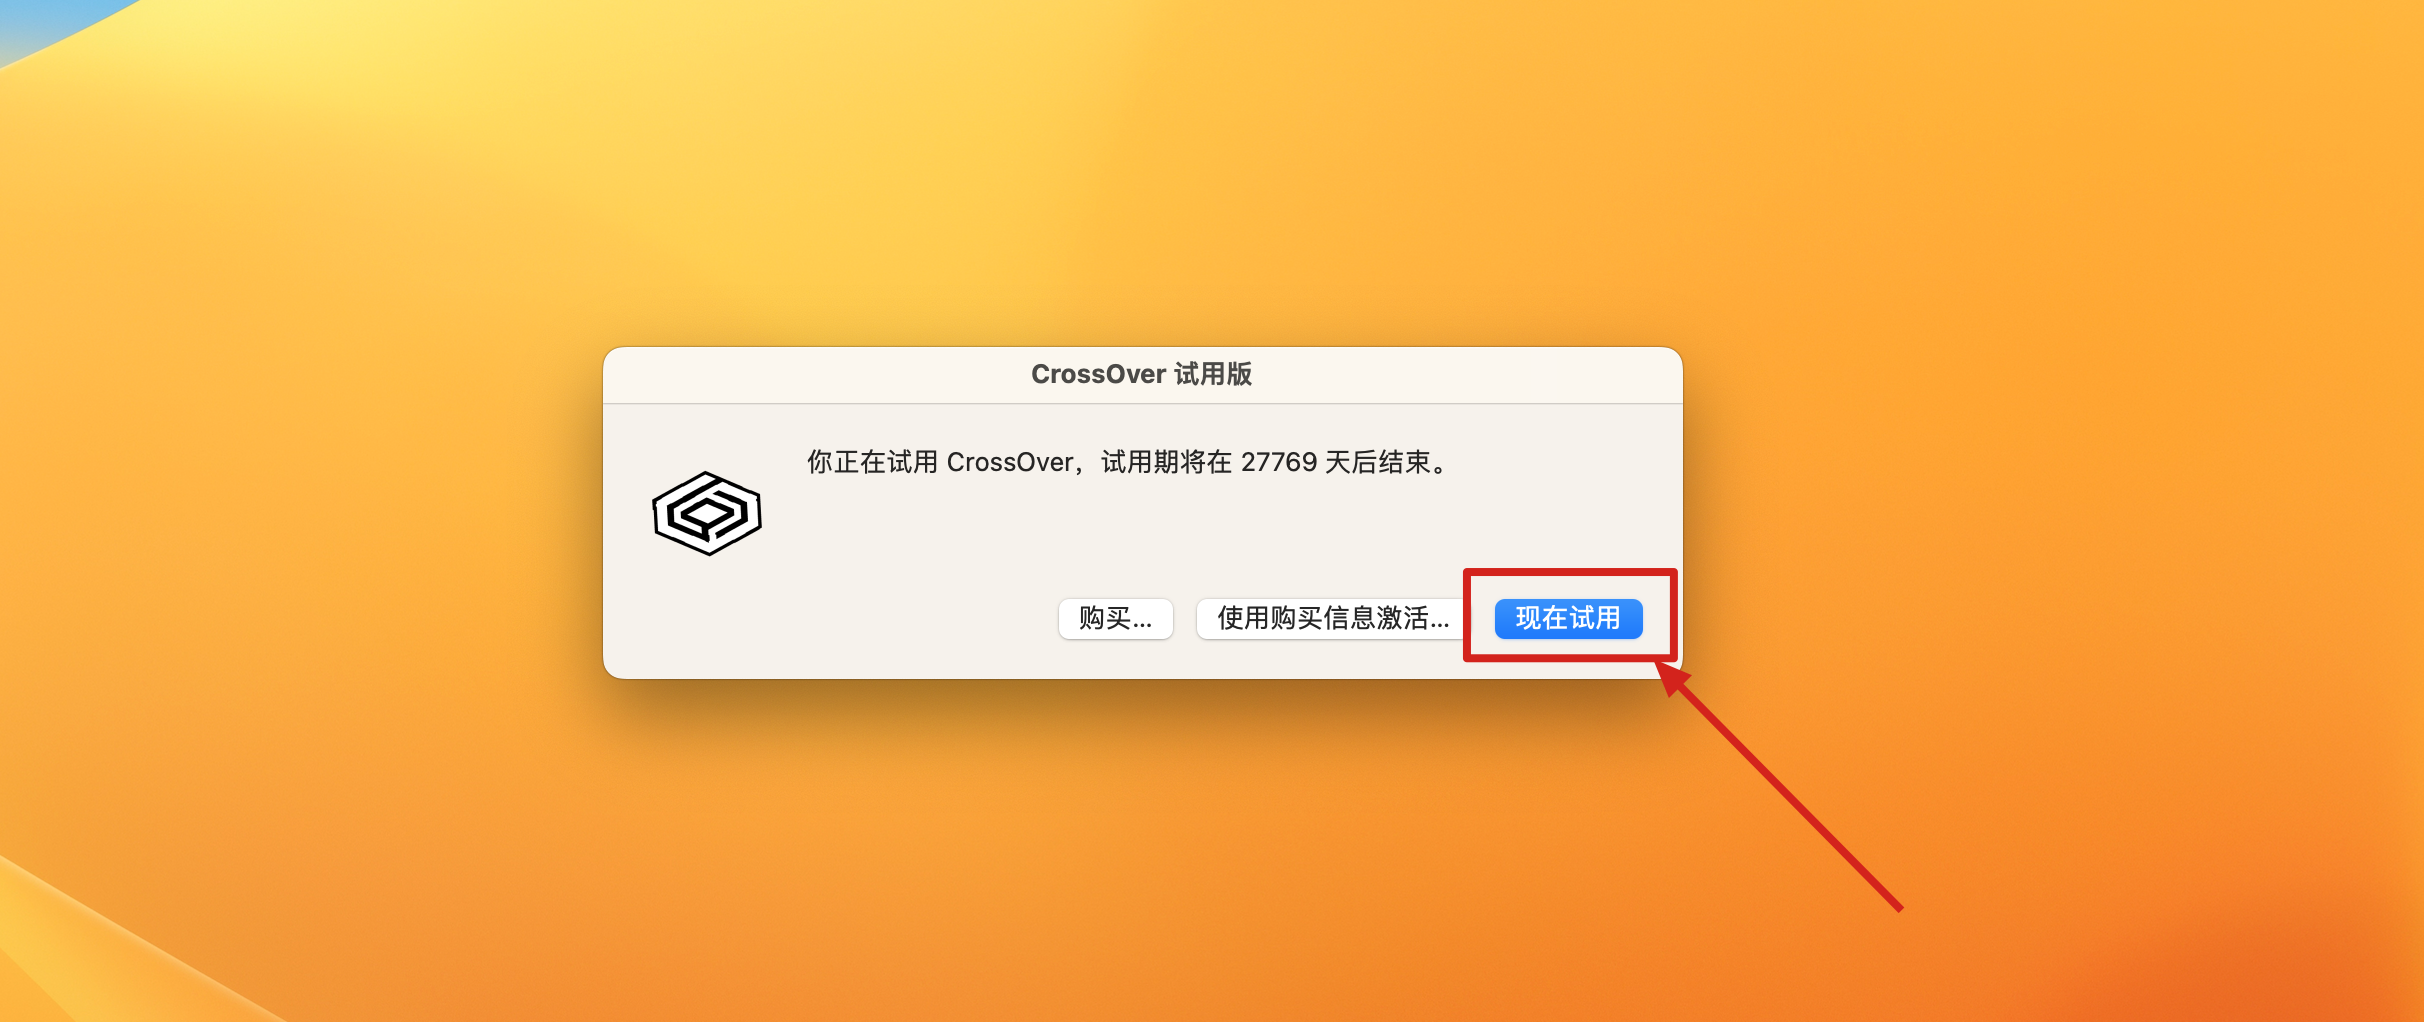 CrossOver 22 for Mac v22.0.1无限试用版 windows 虚拟机